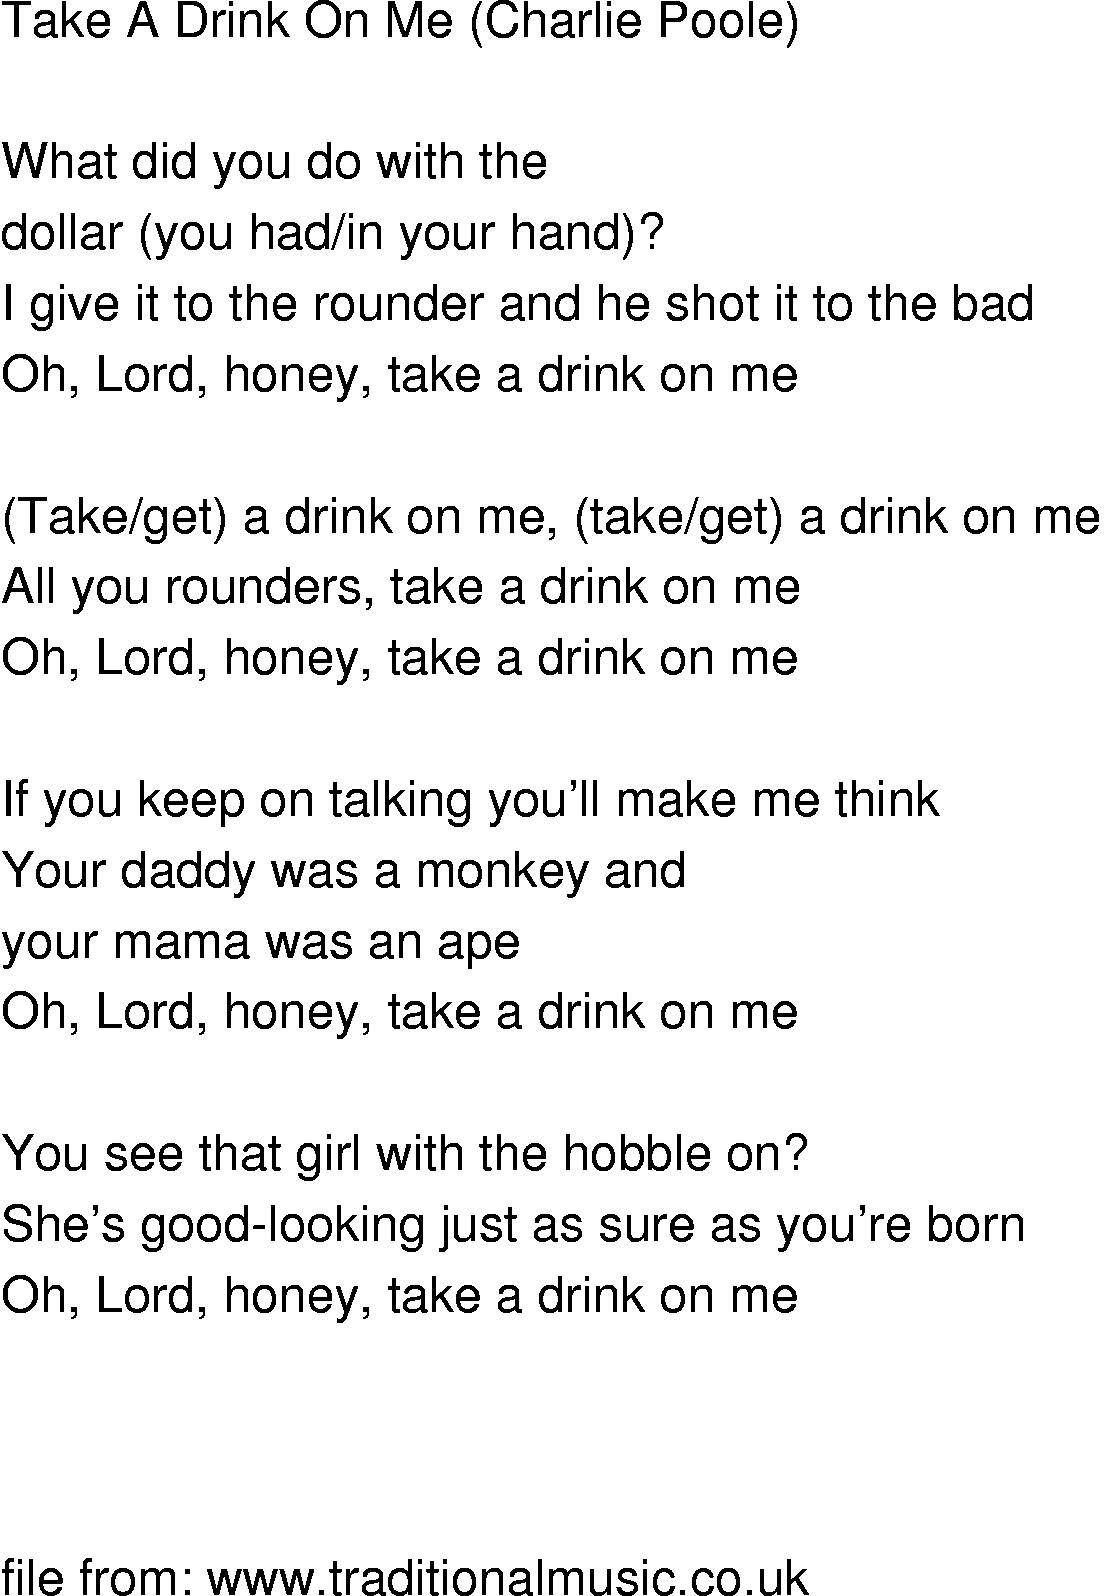 Old-Time (oldtimey) Song Lyrics - take a drink on me